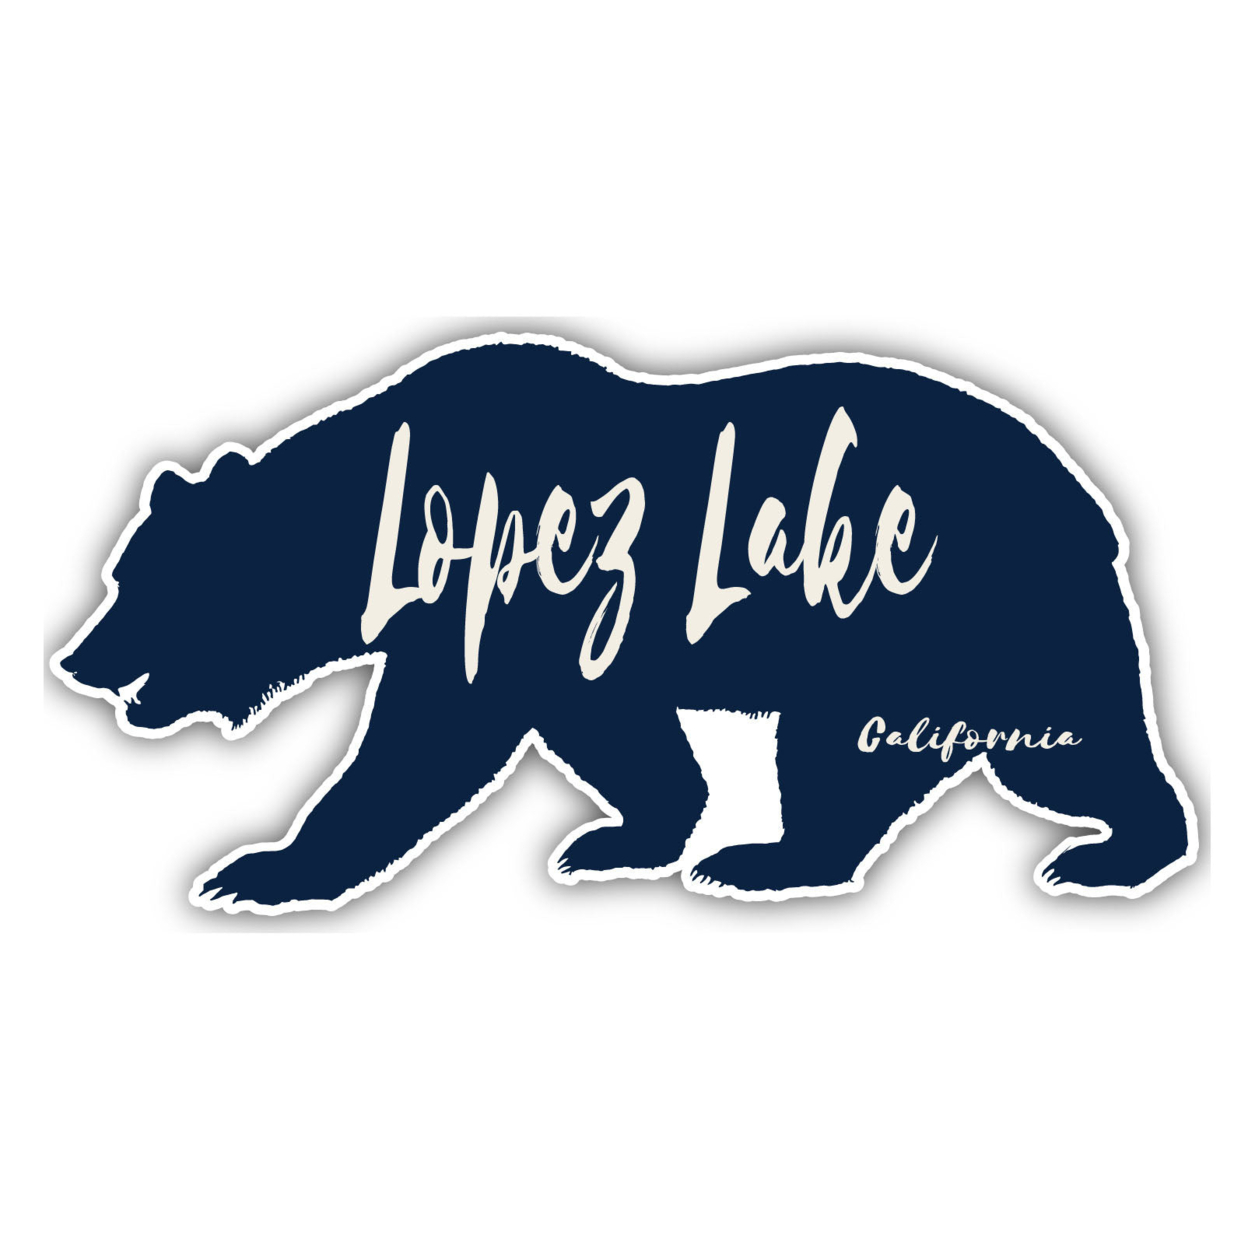 Lopez Lake California Souvenir Decorative Stickers (Choose Theme And Size) - 2-Inch, Adventures Awaits